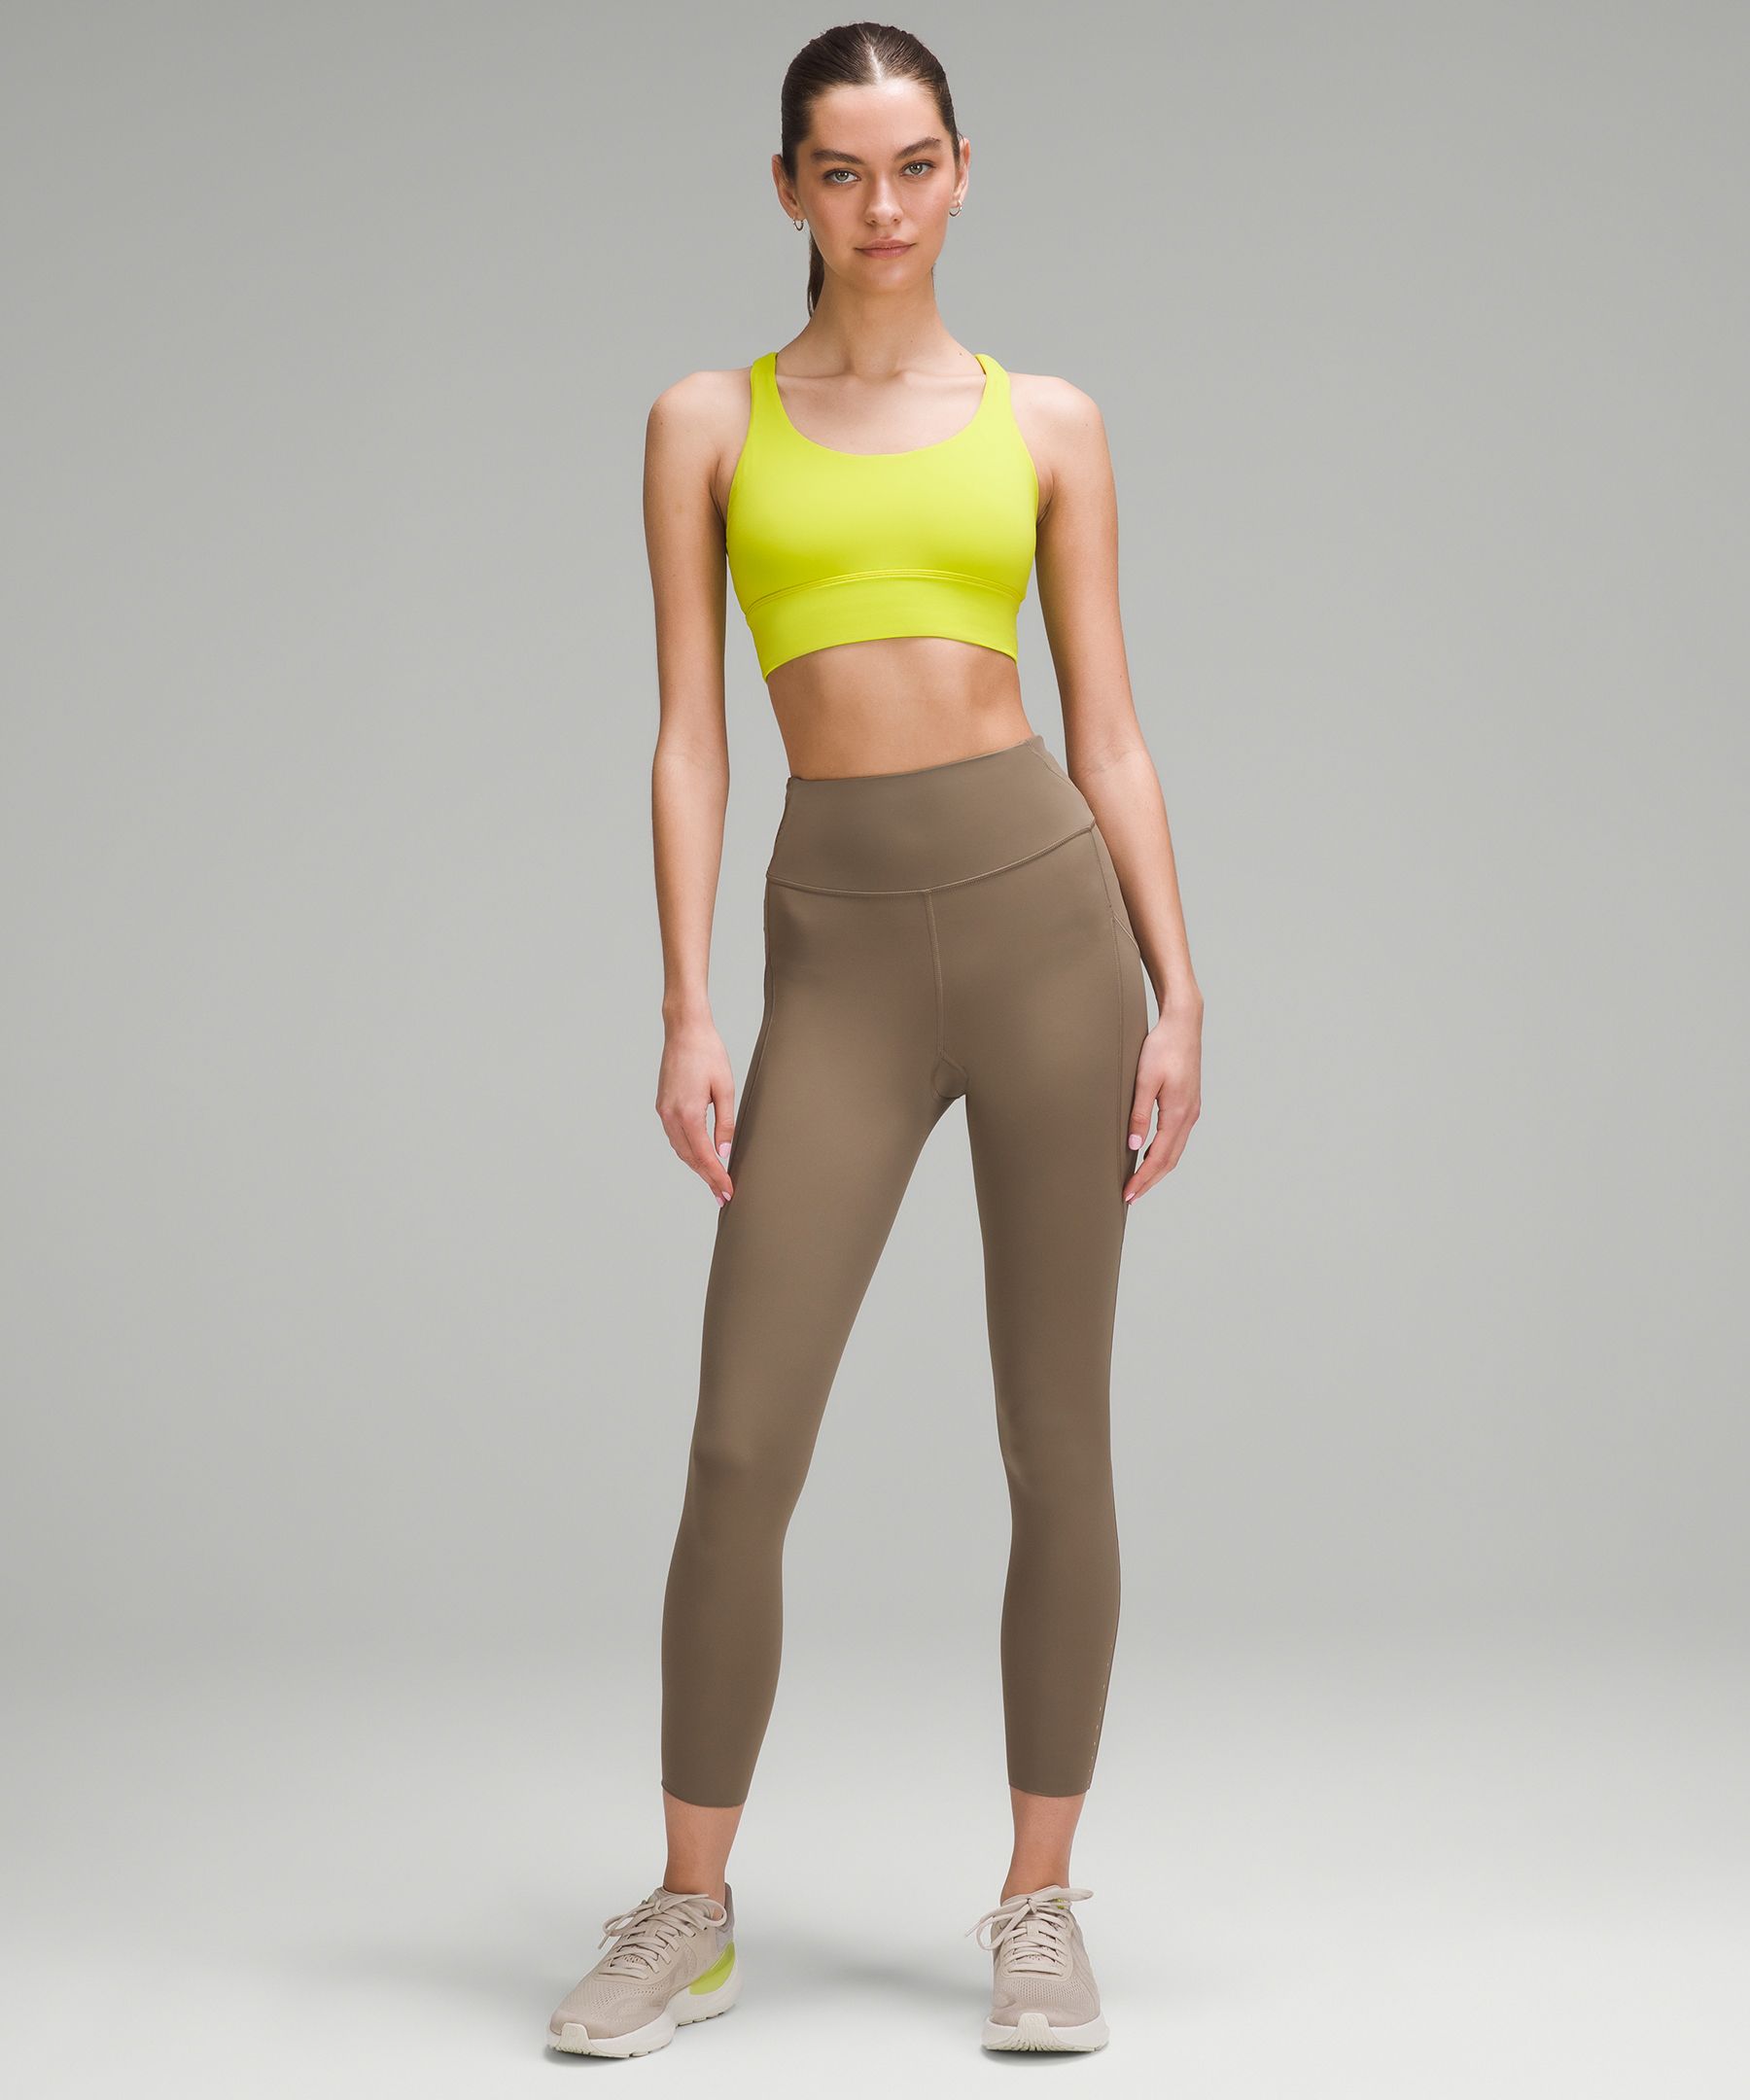 Avia Activewear Crop Leggings Pants Gym Workout Yoga Green Yellow